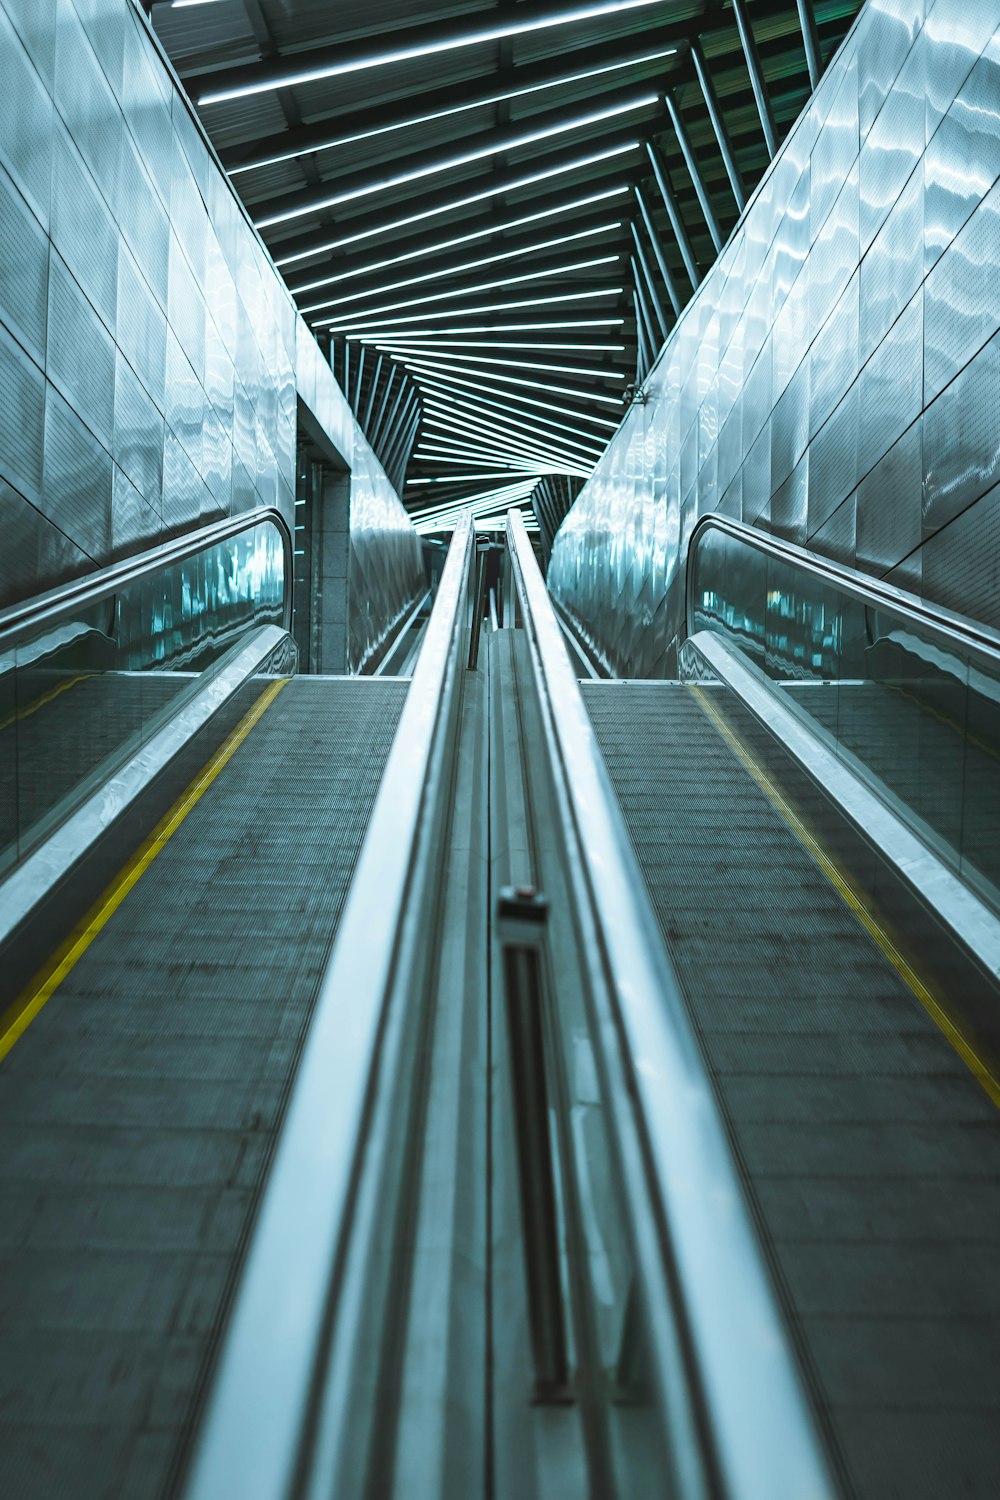 an empty escalator in a subway station